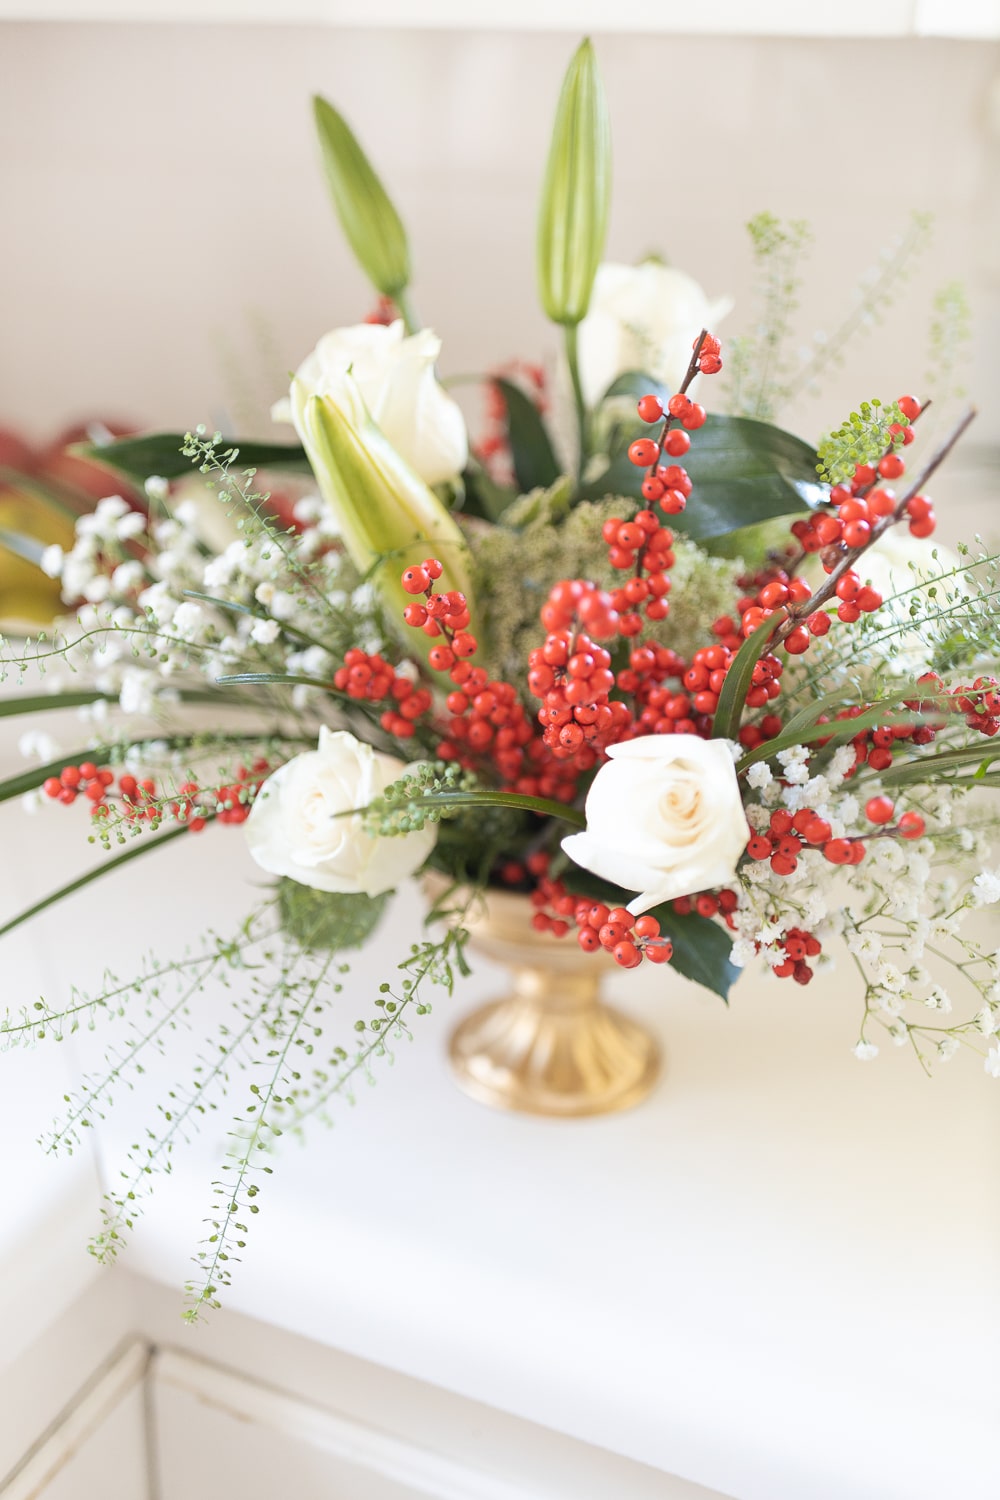 Christmas centerpiece ideas from blogger and amateur florist Stephanie Ziajka on Diary of a Debutante